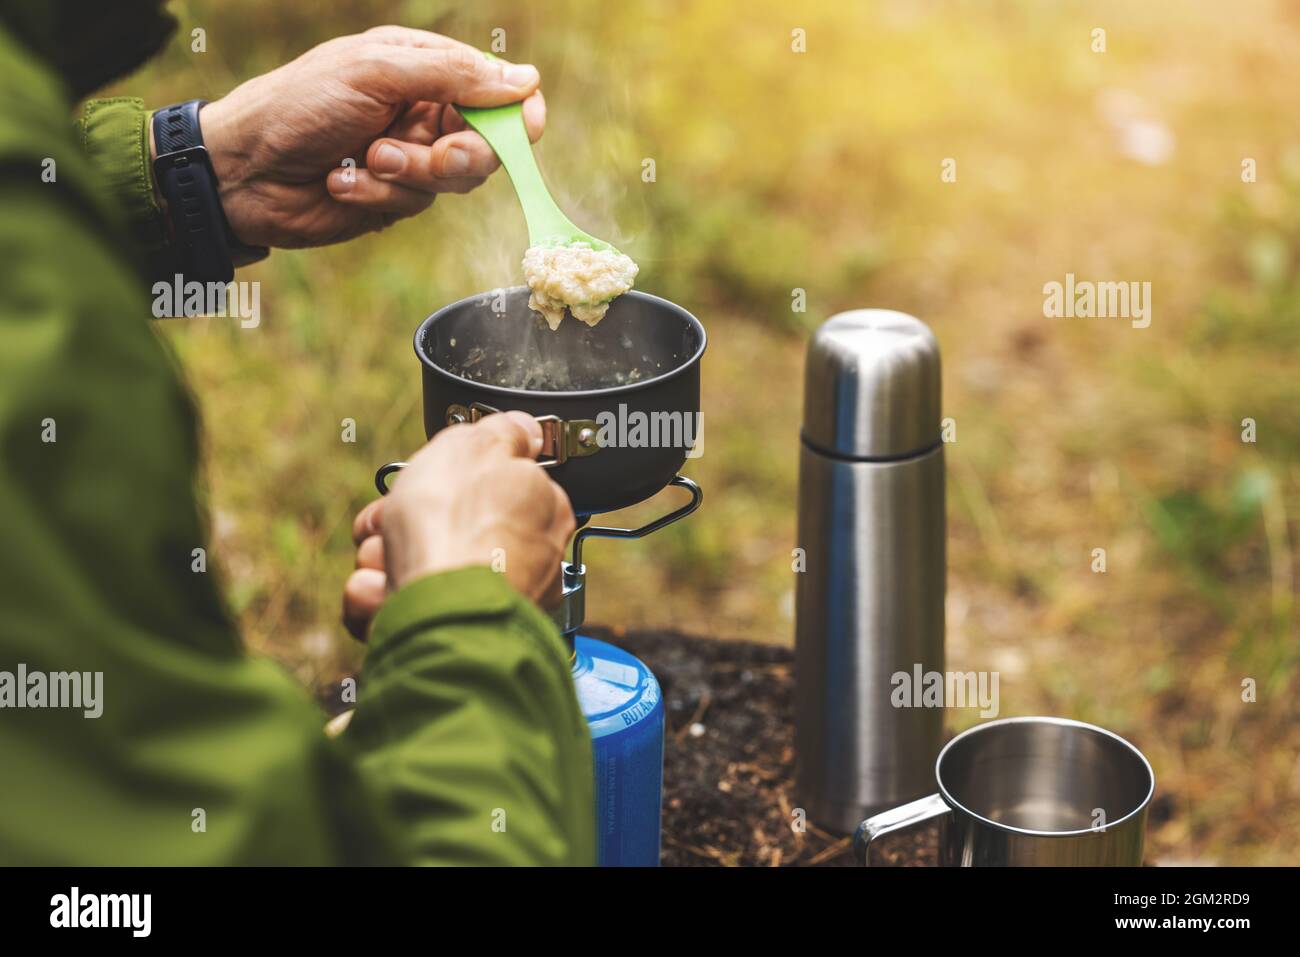 preparing oatmeal porridge outdoors on gas burner. camping cooking equipment Stock Photo